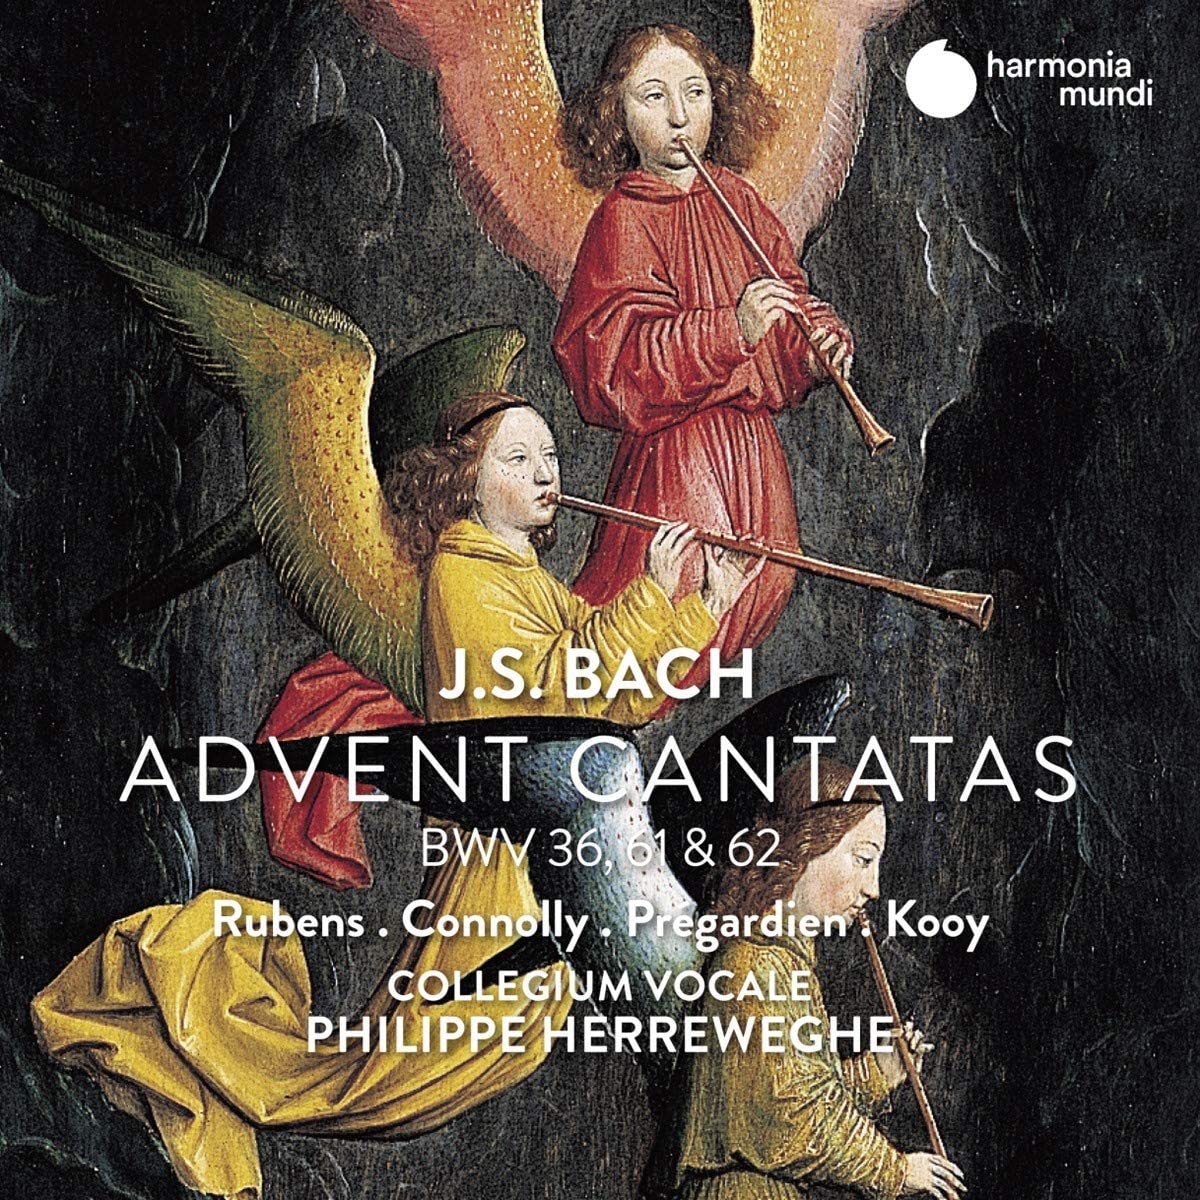 J.S. Bach: Advent Cantatas, BWV 36, 61 & 62 | Collegium Vocale Gent